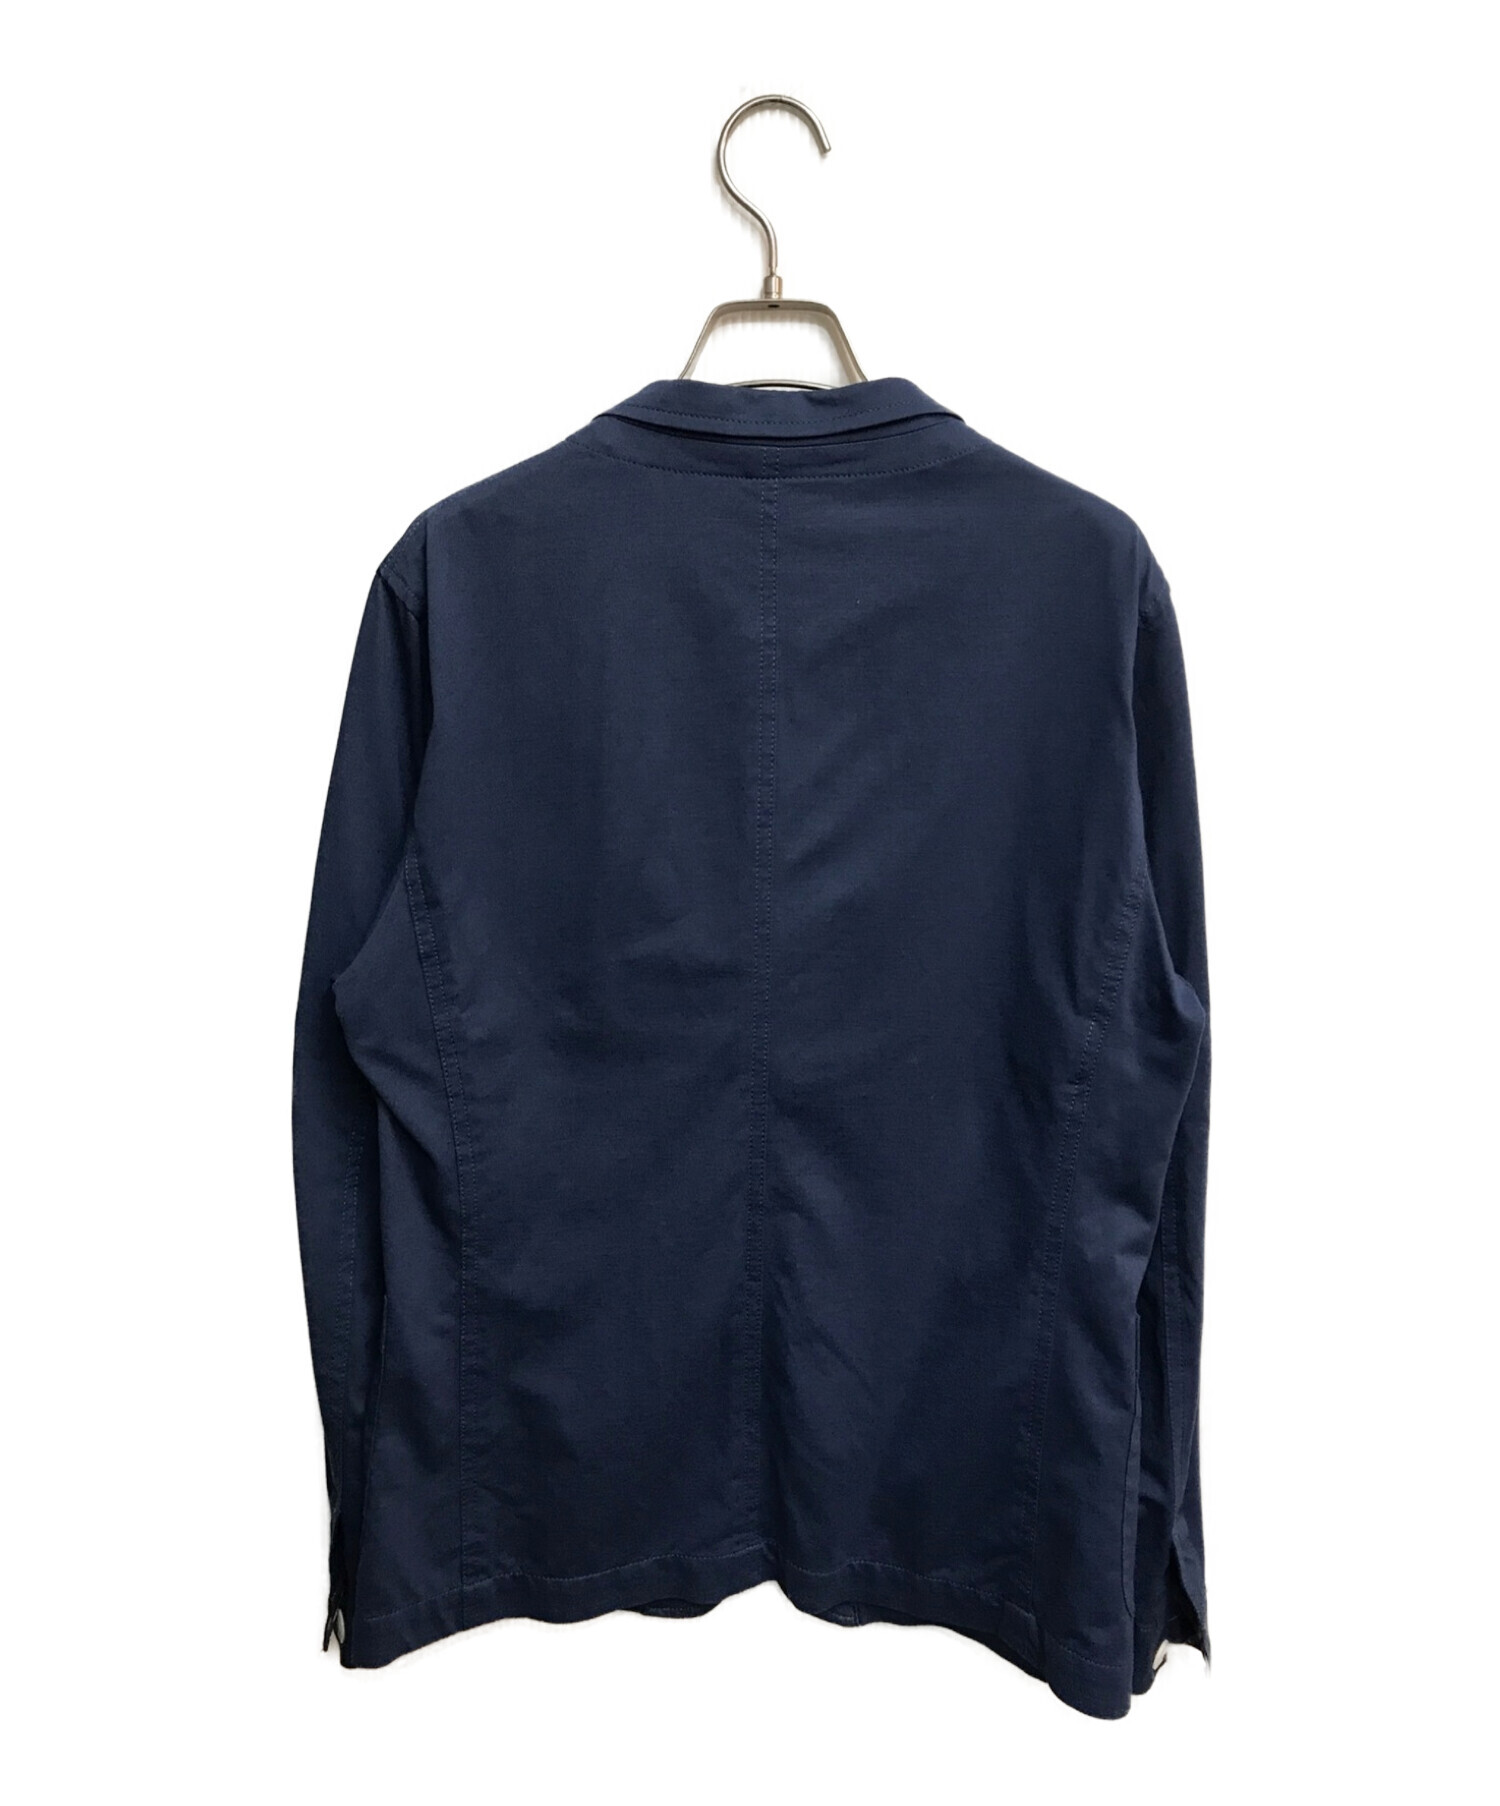 BURBERRY BLACK LABEL (バーバリーブラックレーベル) テーラードジャケット ブルー サイズ:M